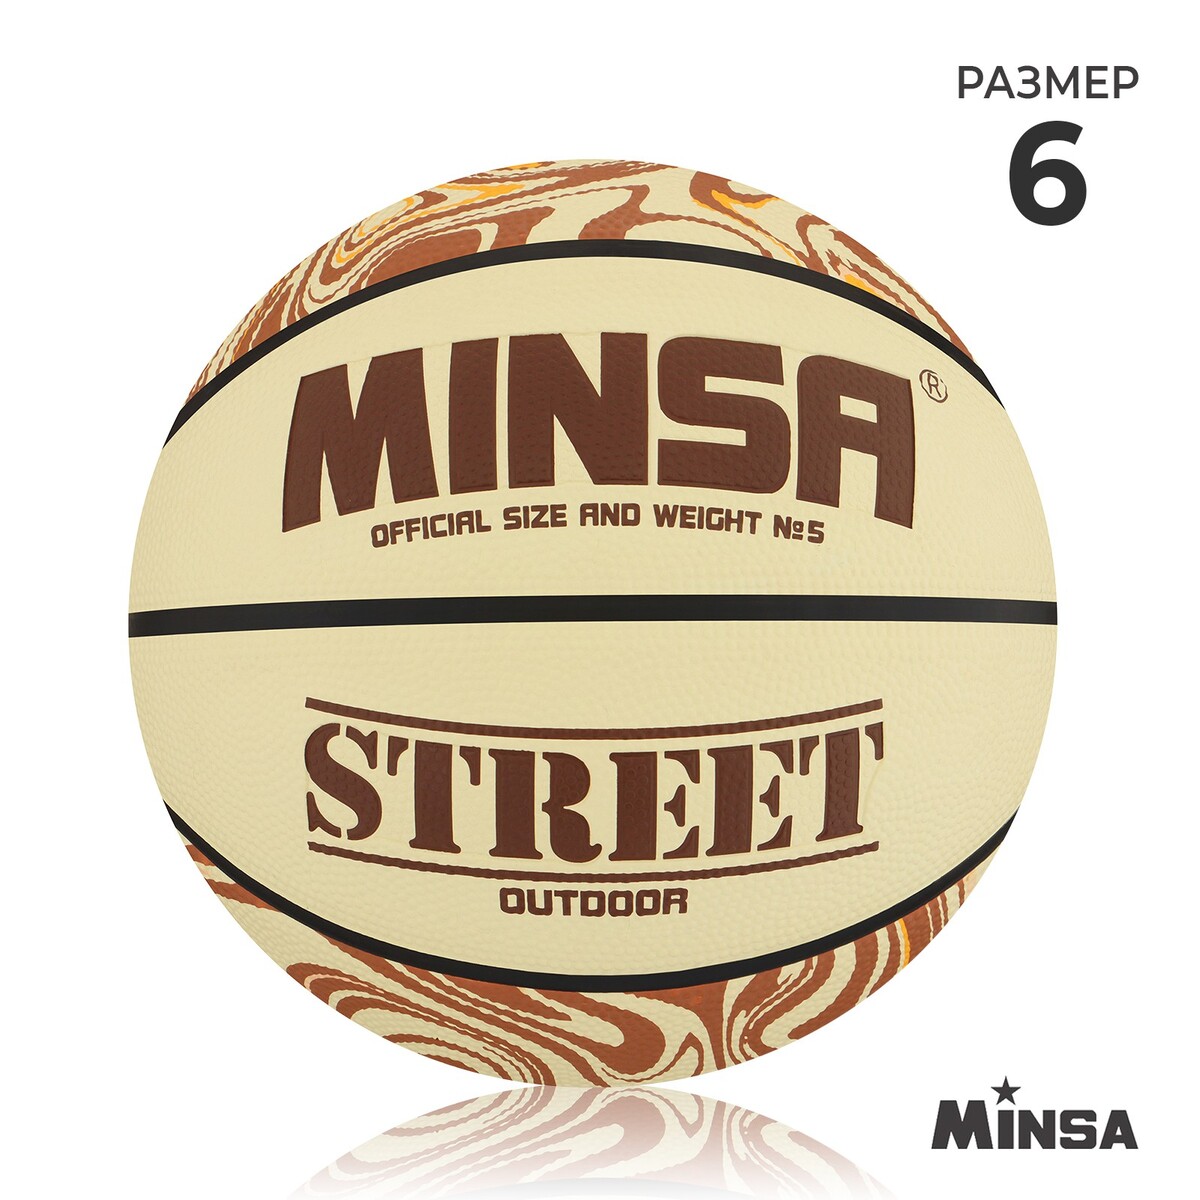 Мяч баскетбольный minsa street, пвх, клееный, 8 панелей, р. 6 hti jcb мусоровоз street kingz